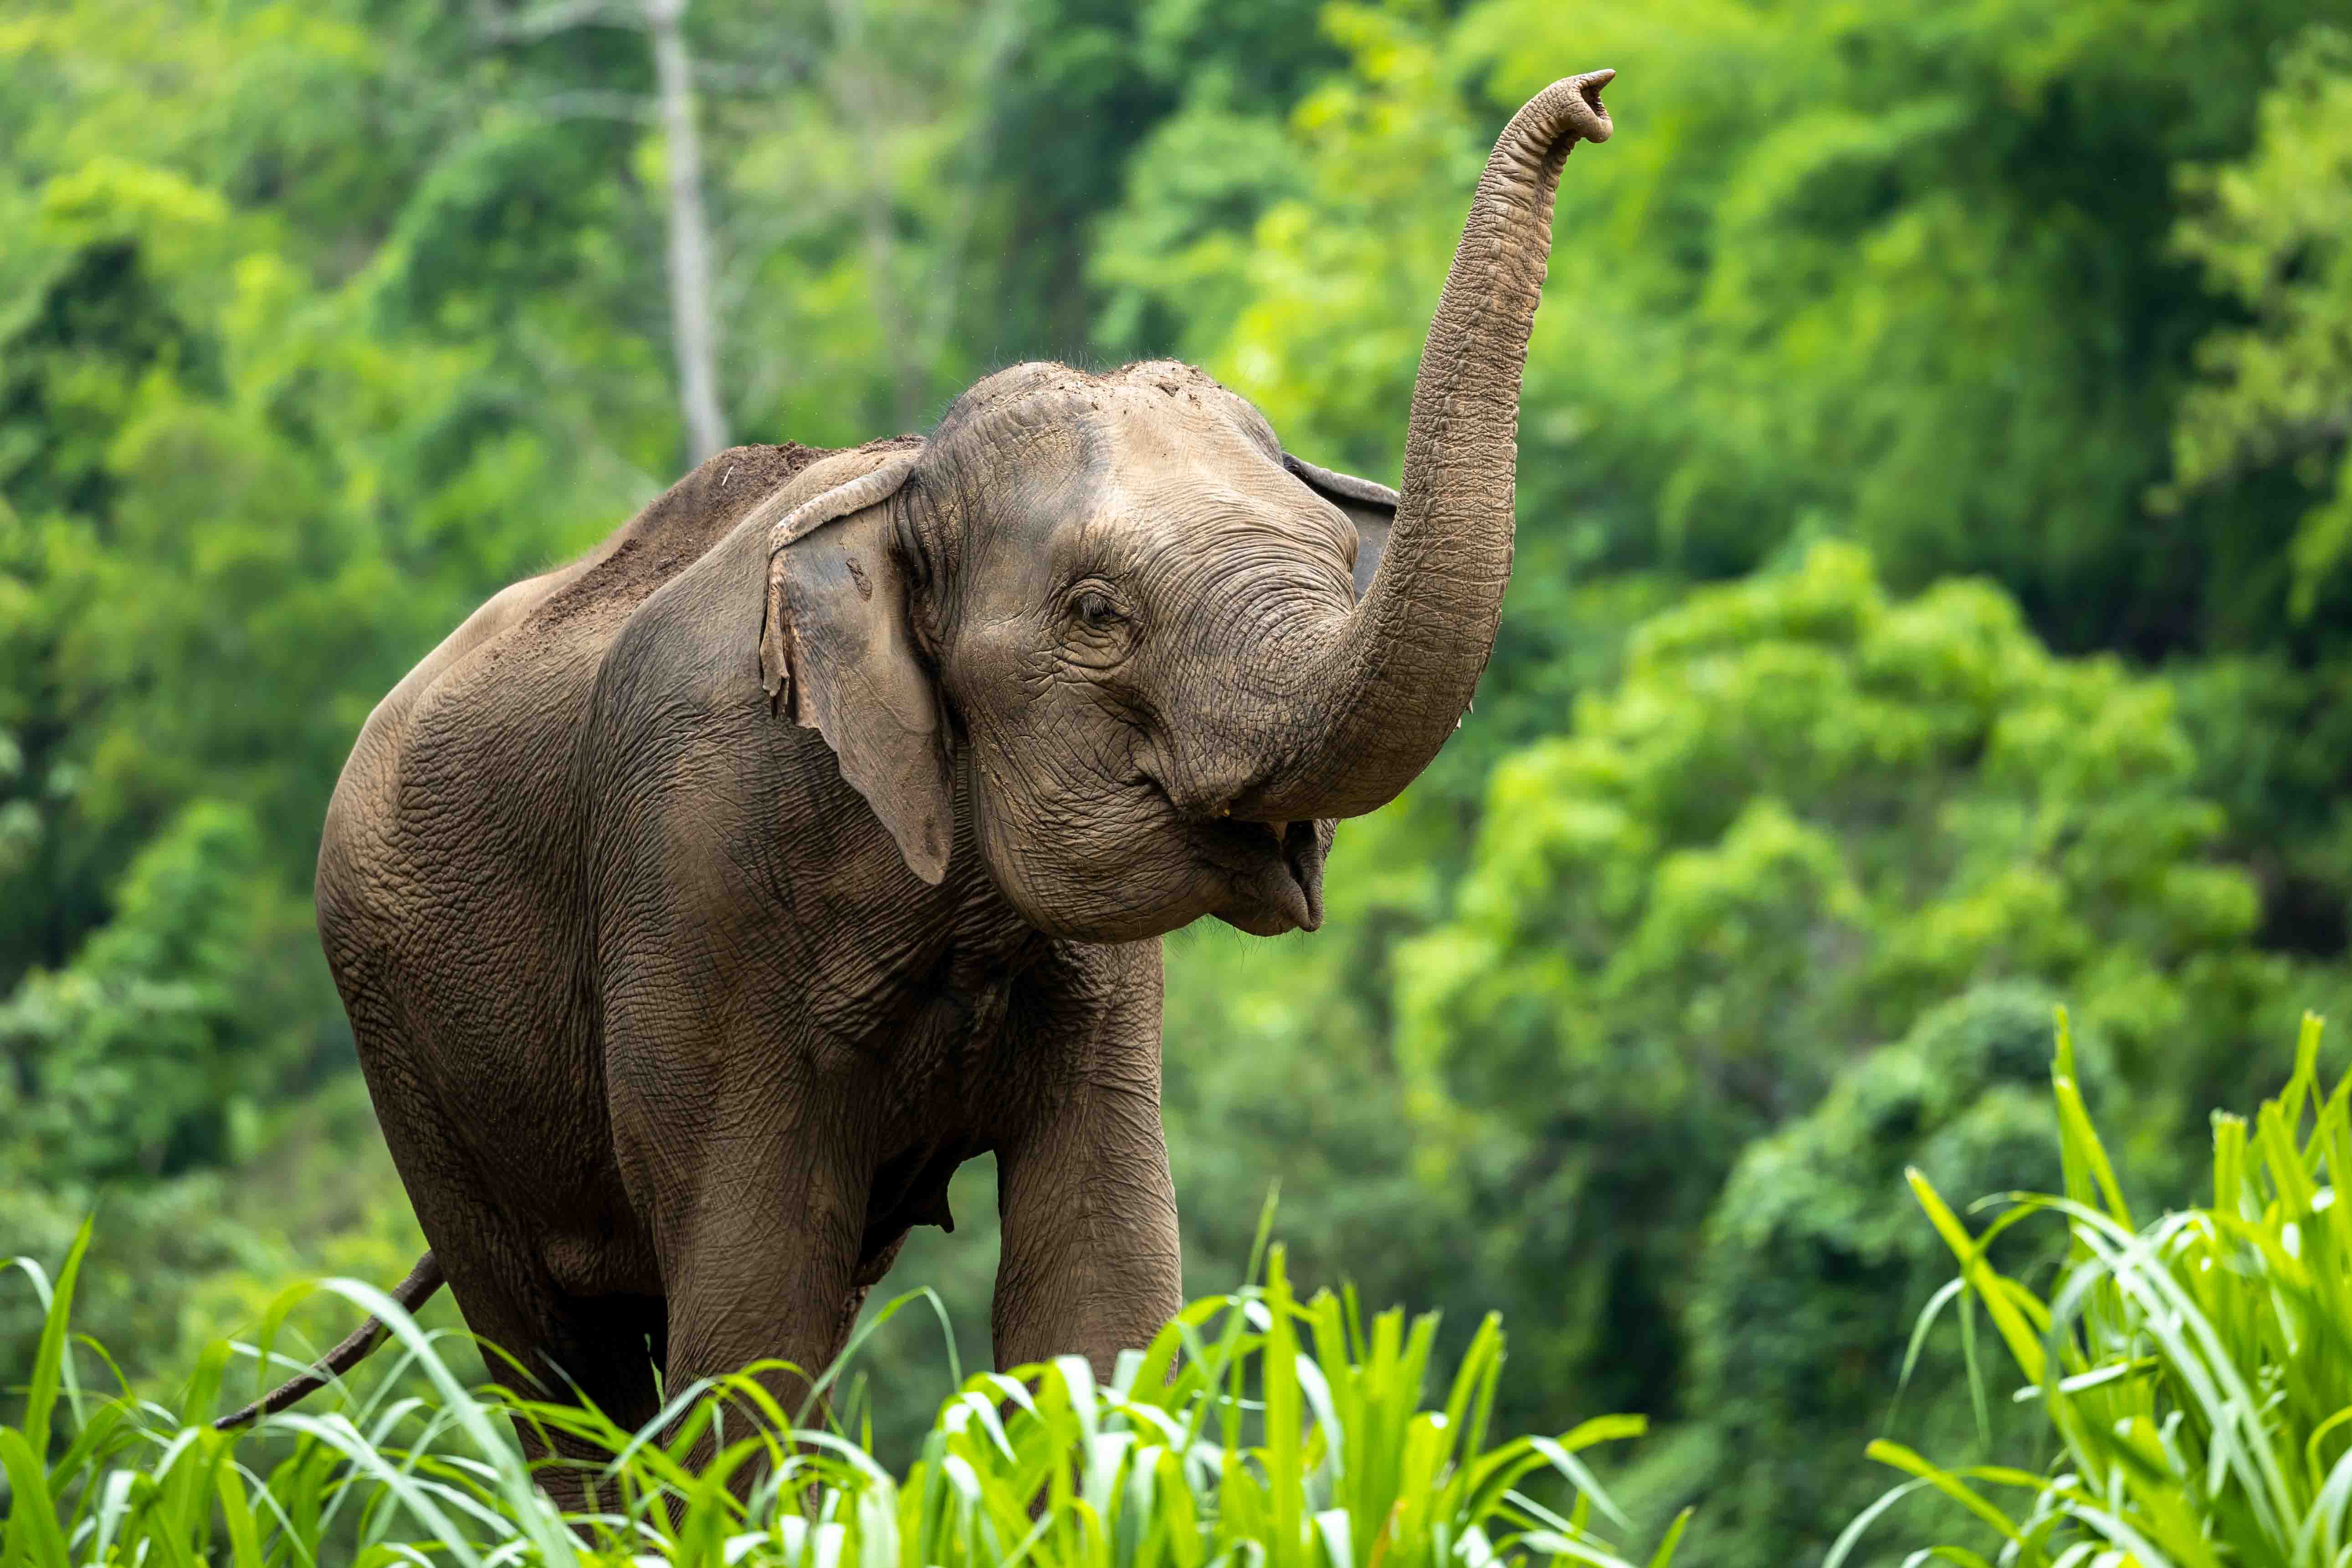 Elephant in Thailand.